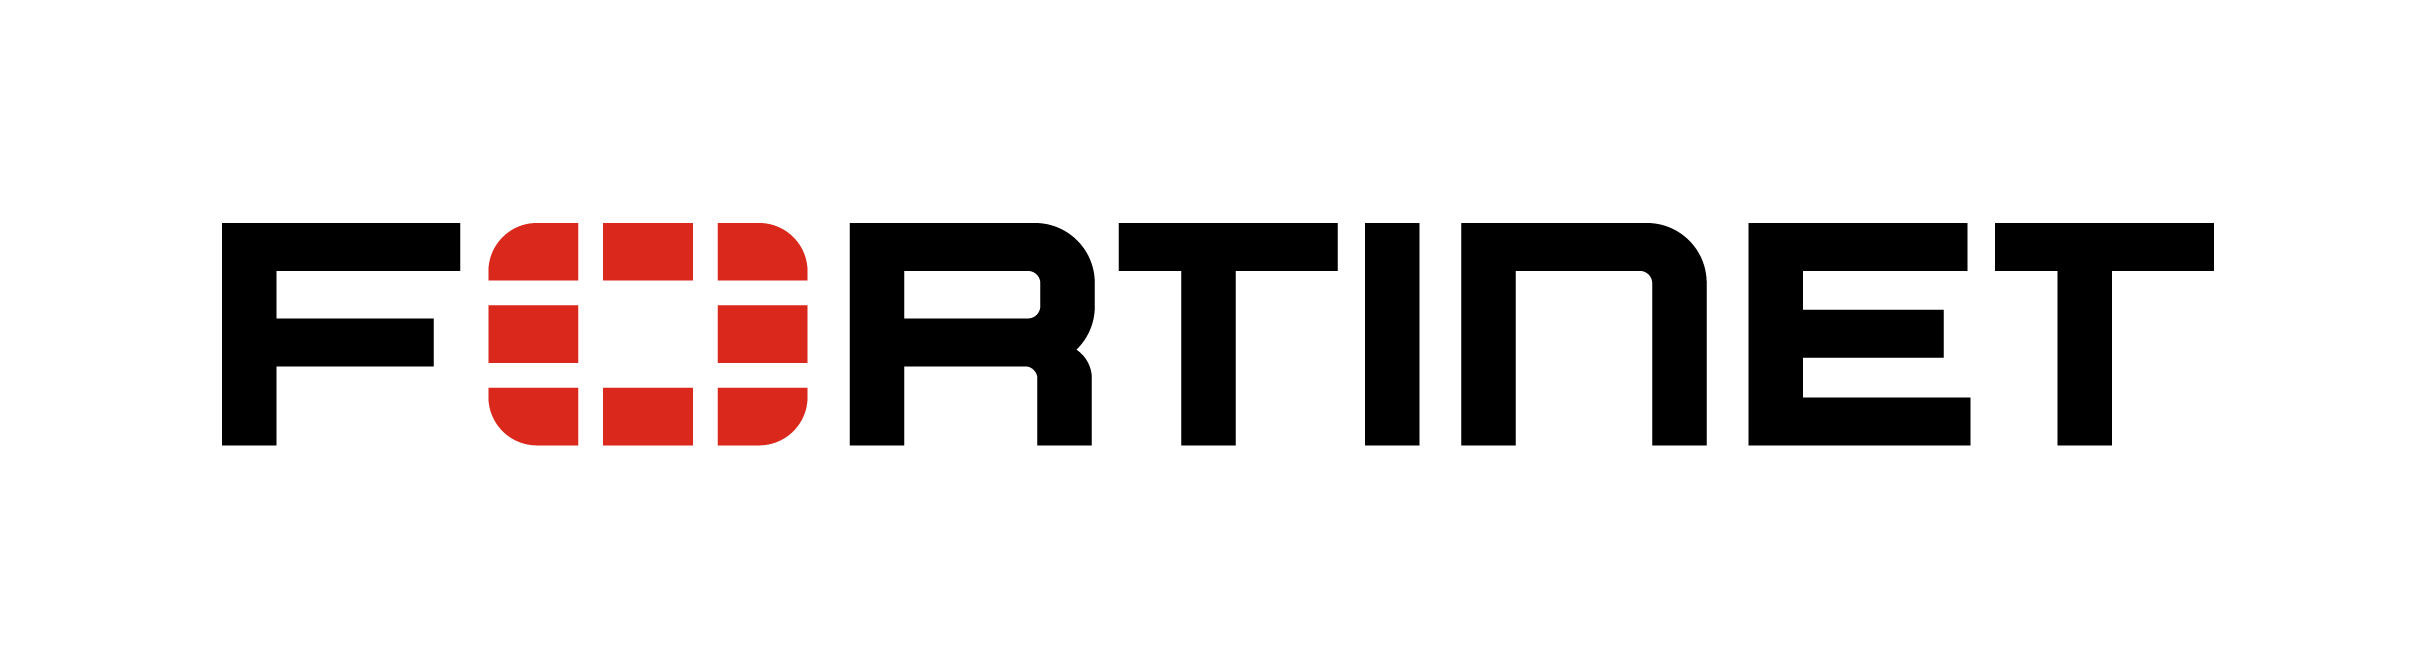 fortinet-logo-rgb-black-red